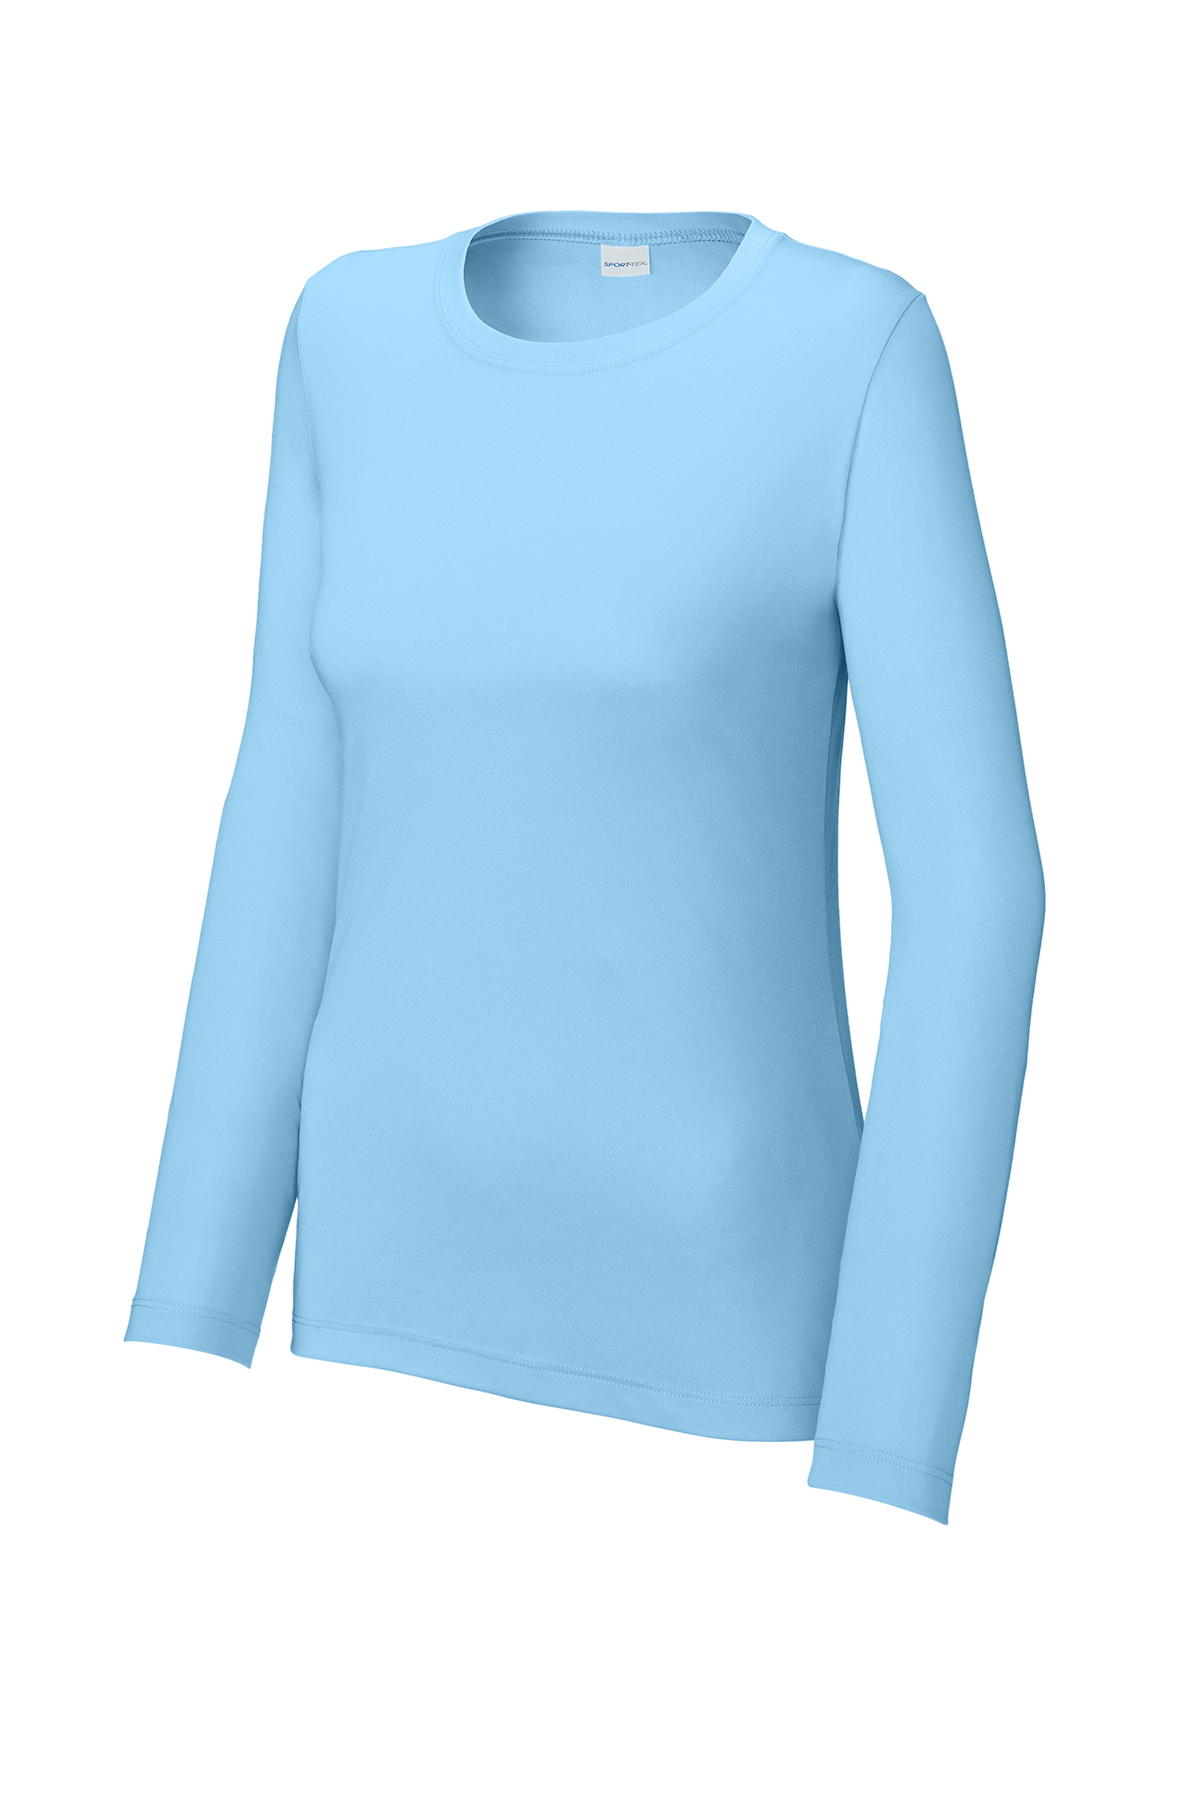 Sport-Tek Pro Sleeve Ladies | Posi-UV Sport-Tek Long | Product